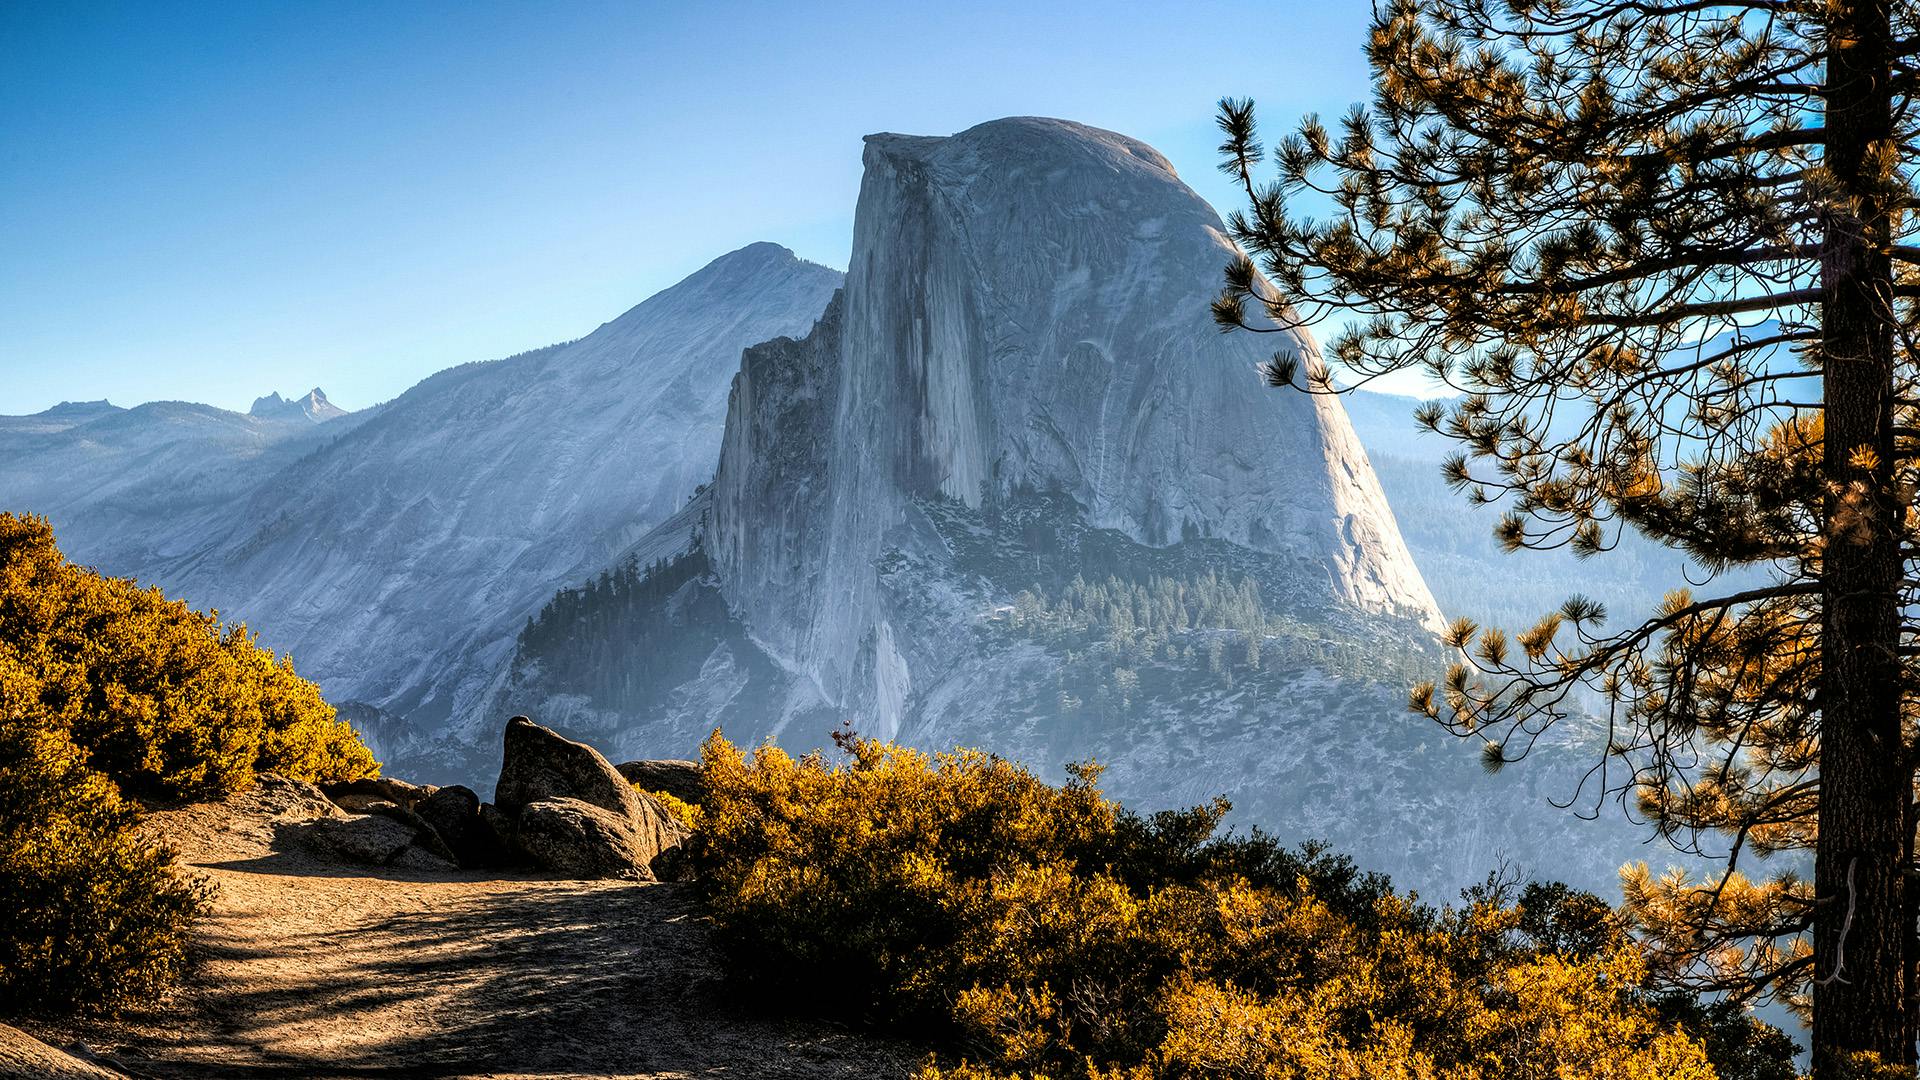 Image de Yosemite National Park